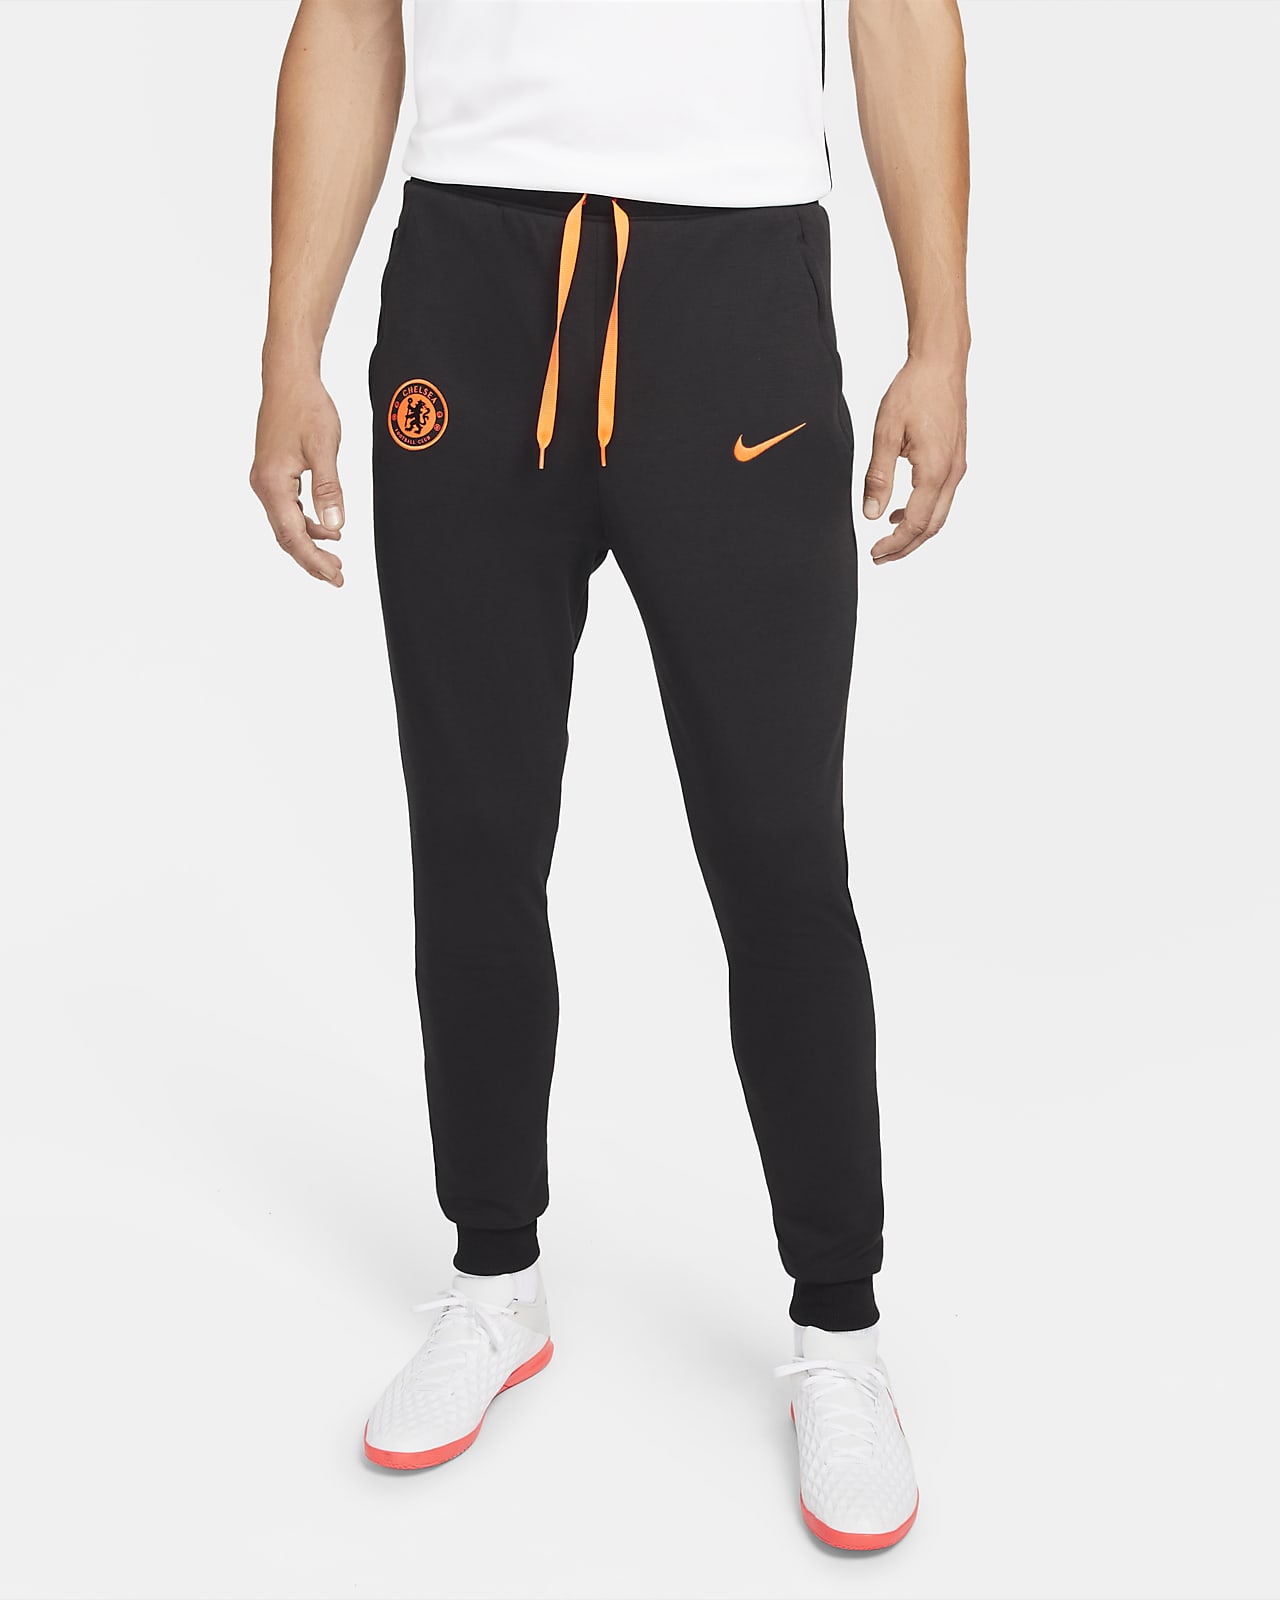 Chelsea F.C. Men's Nike Dri-FIT Fleece Football Pants